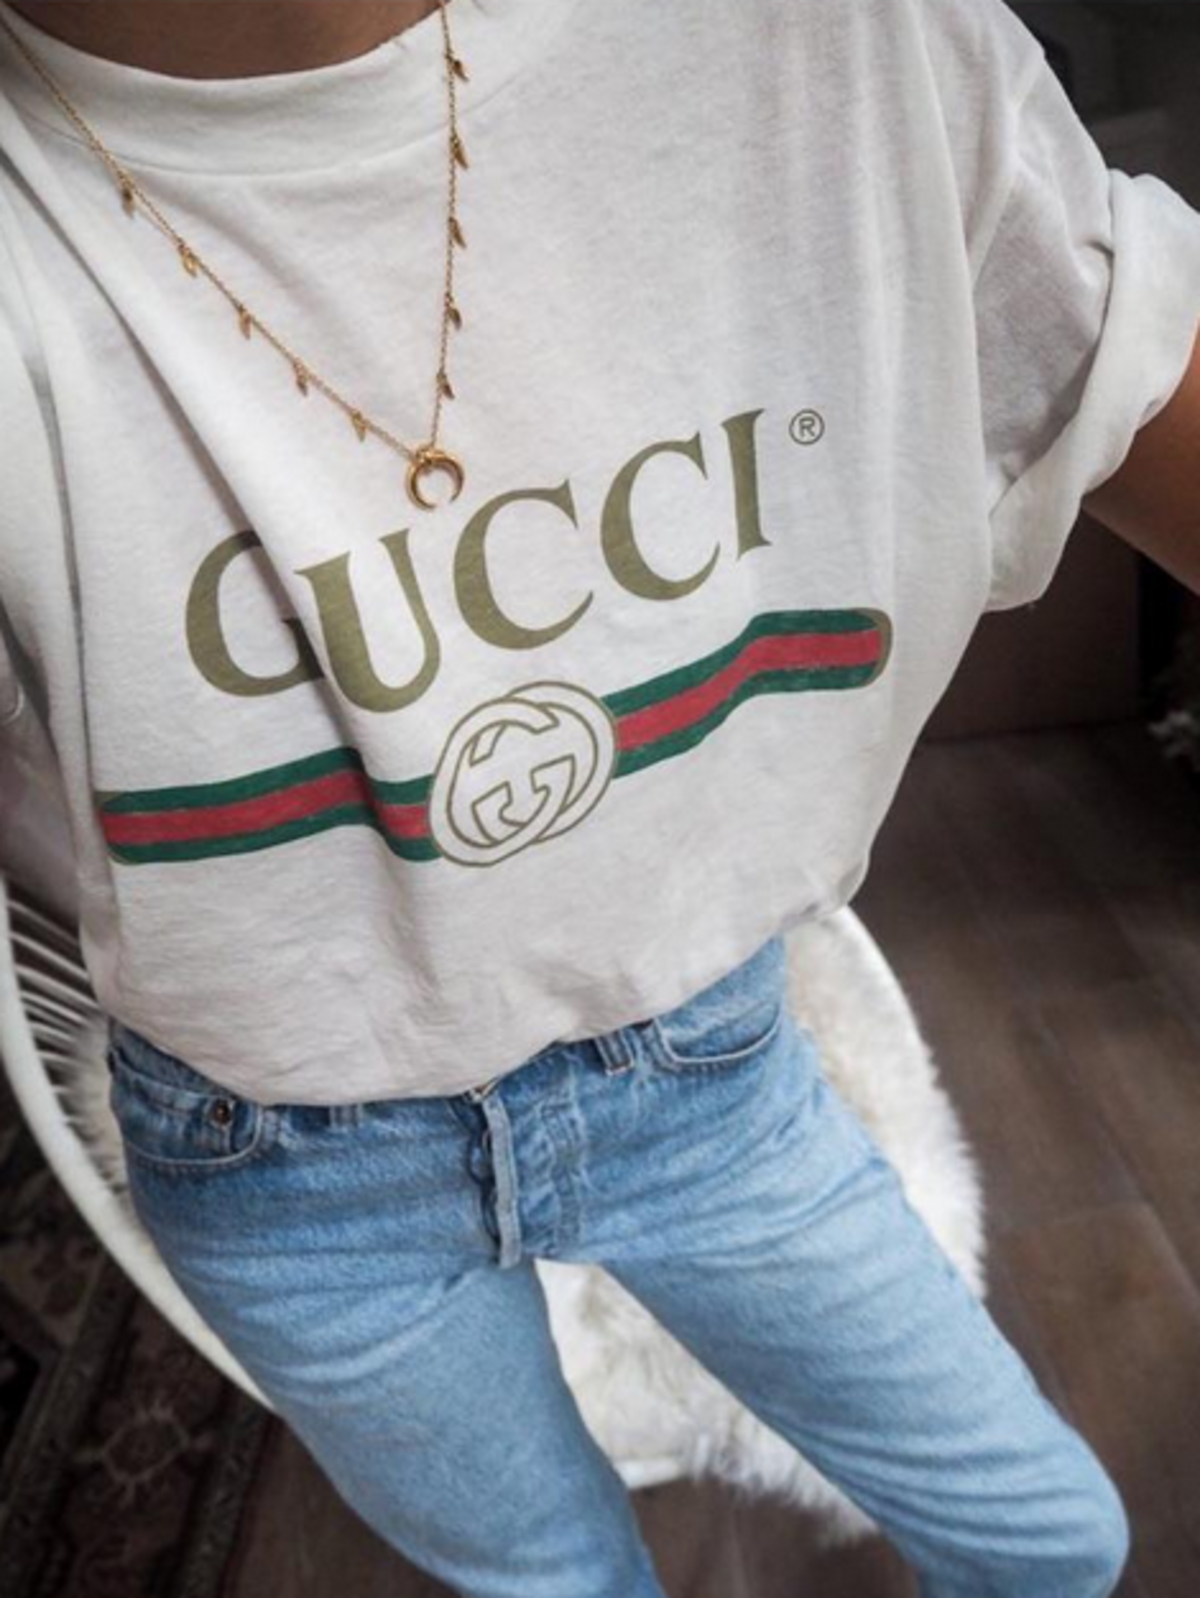 Stylizacje z t-shirtem Gucci